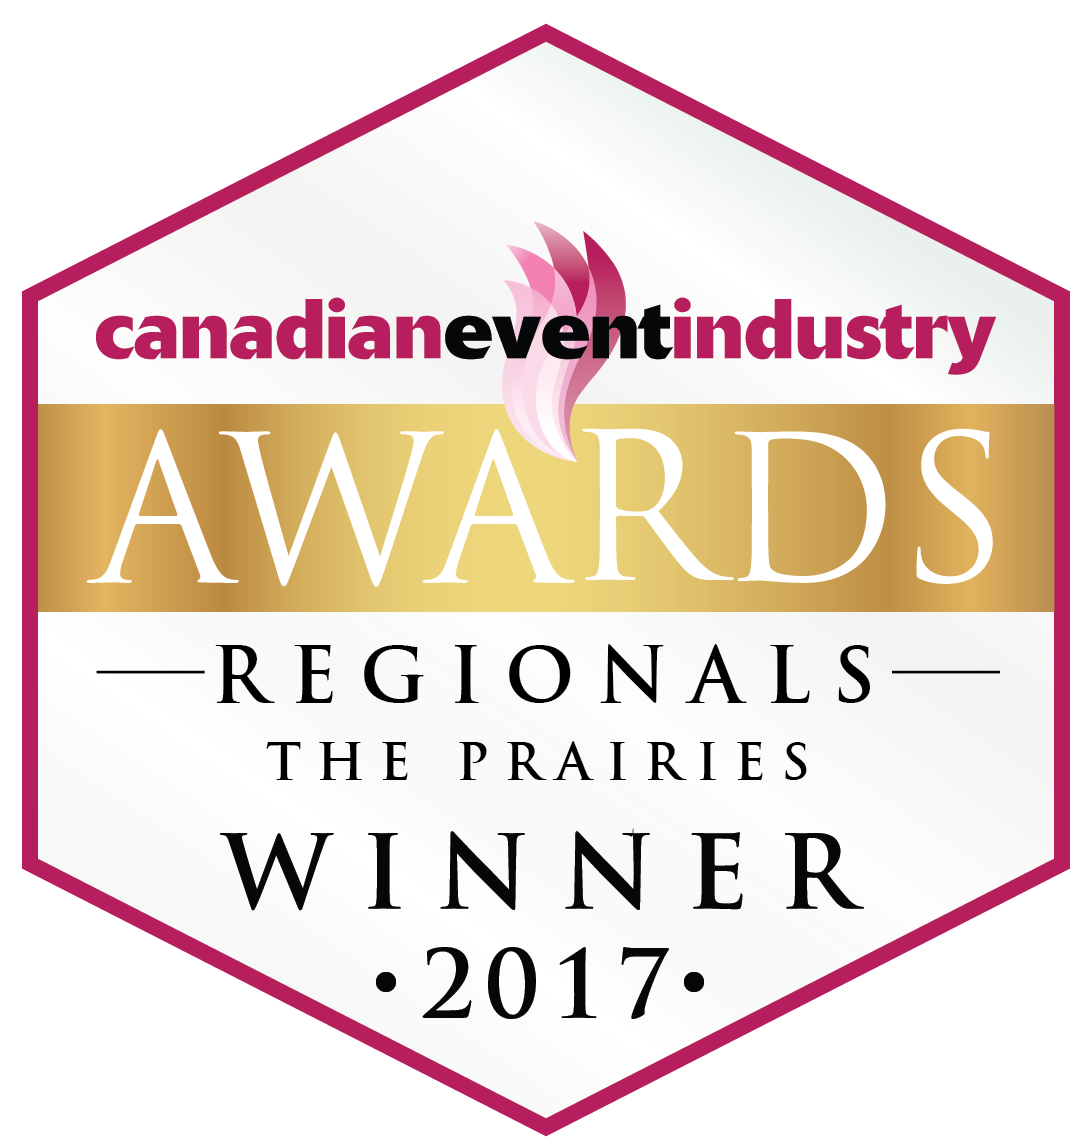 Canadian Event Industry Awards Regionals The Prairie Winner 2017